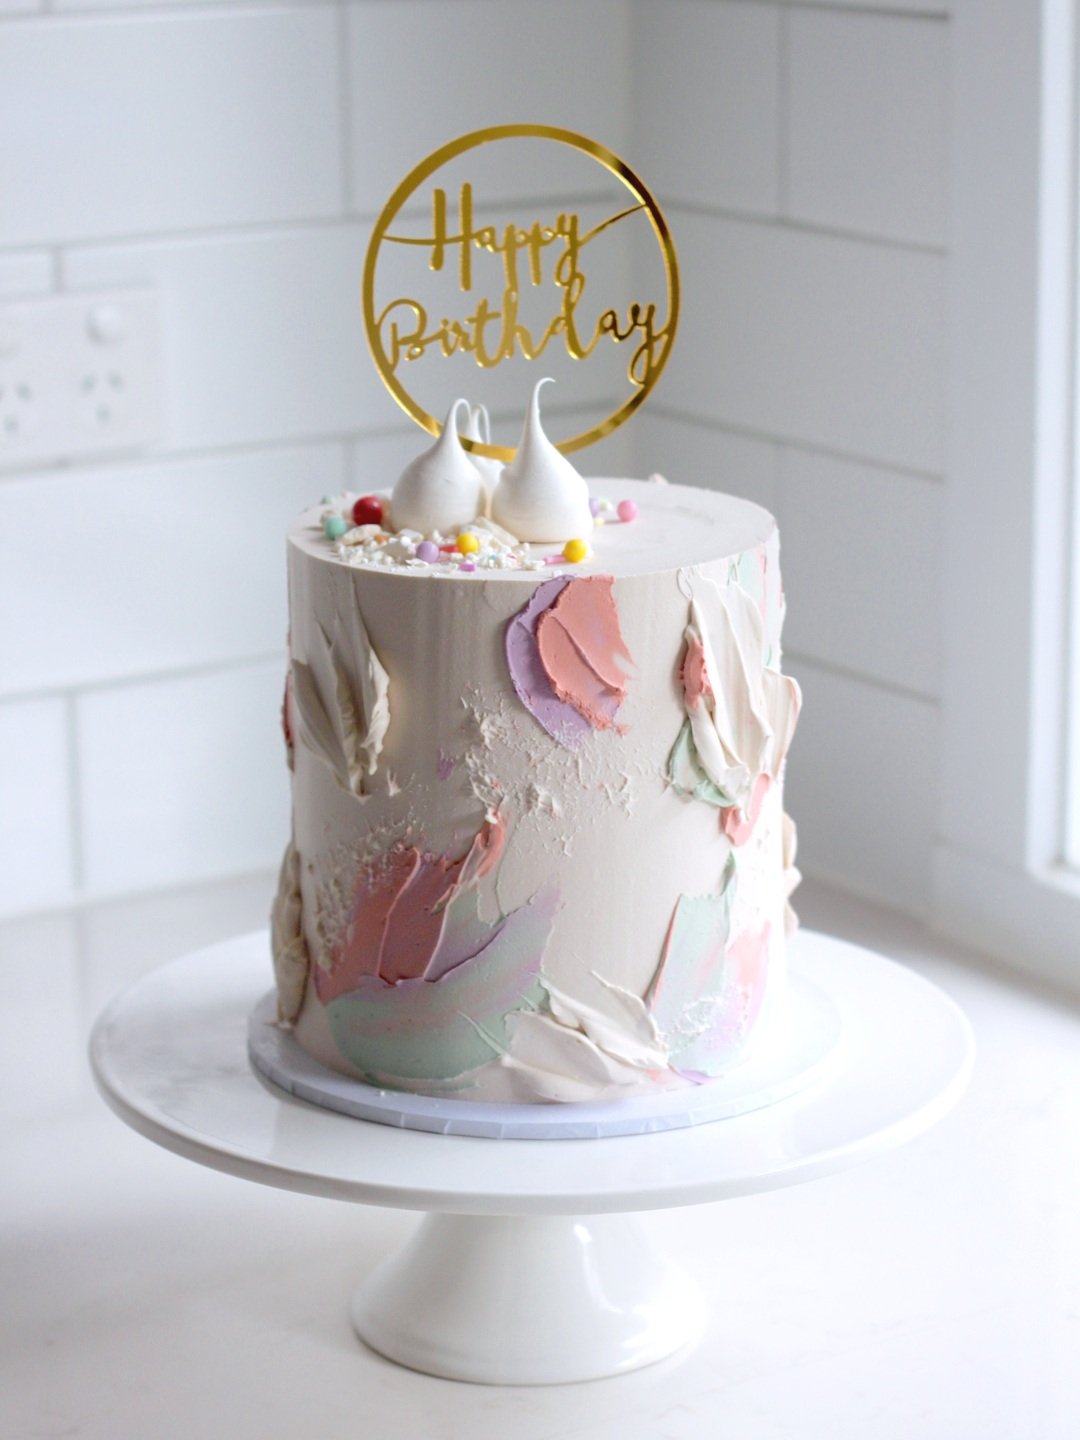 Celebration Cakes-Bachelorette Cake-Redvelvet Cake with Cream Cheese  Frosting - 1kg - The Weirdough's